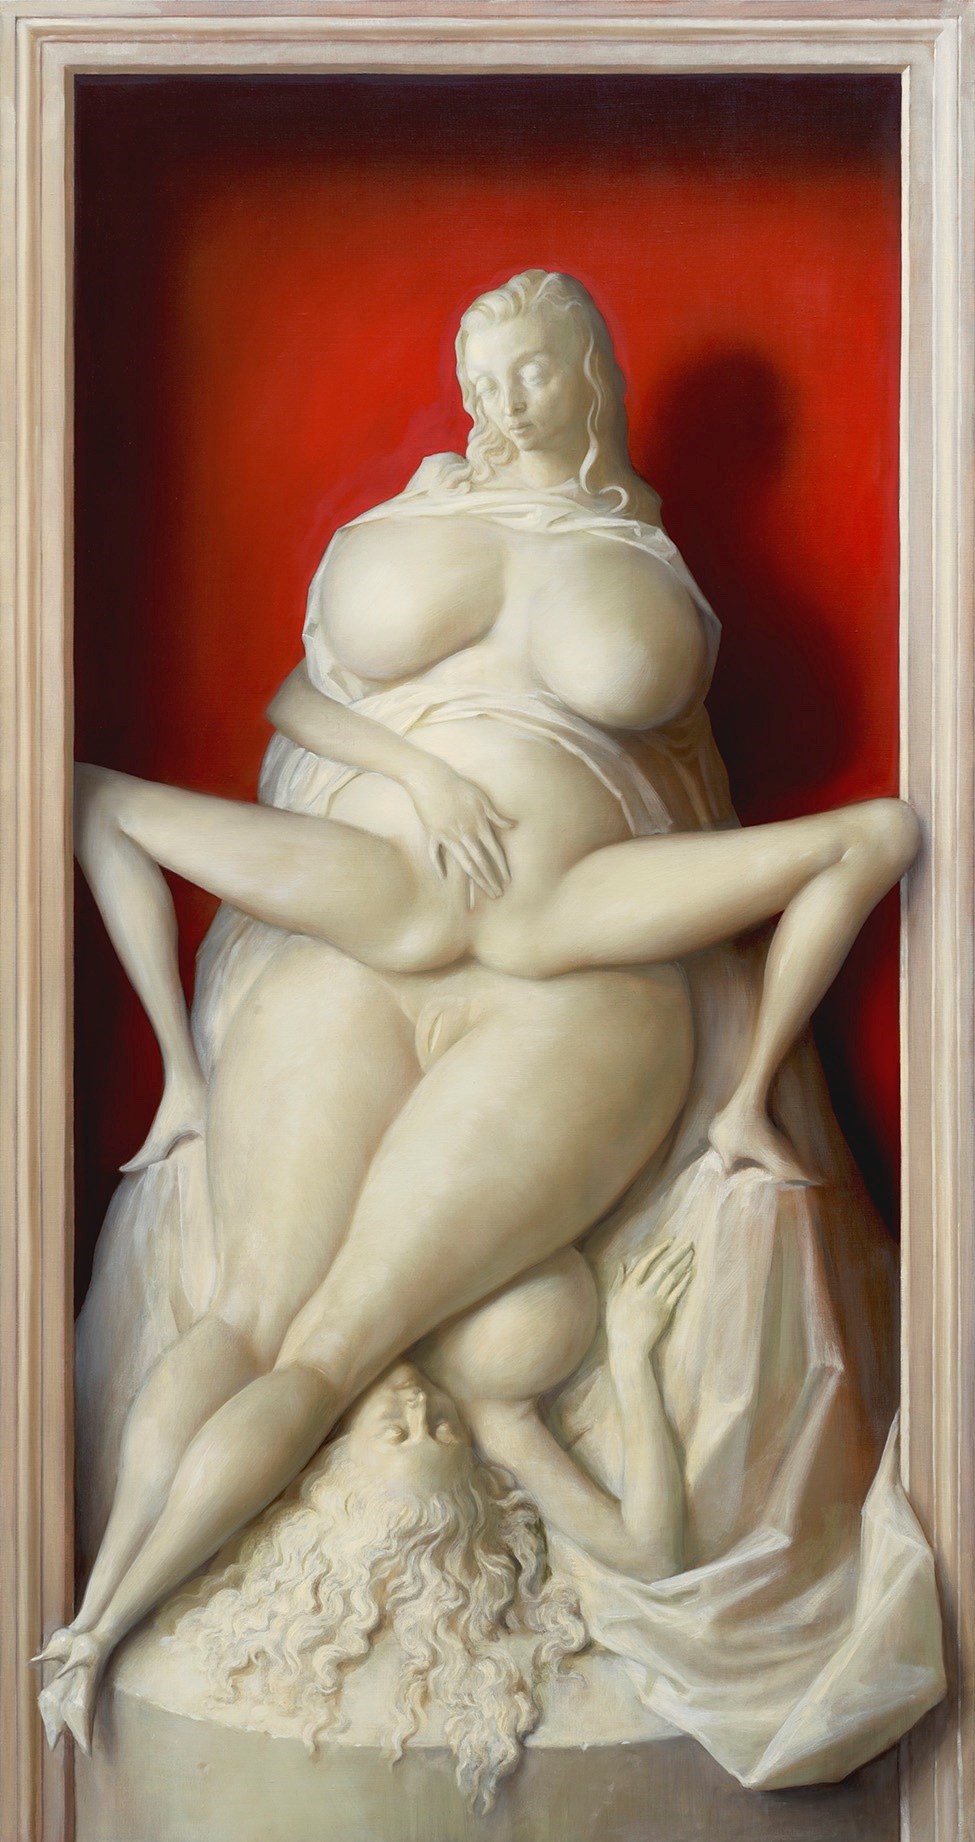 Painting Porn Art - John Currin captures the desolate mood of porn as classical art | Dazed